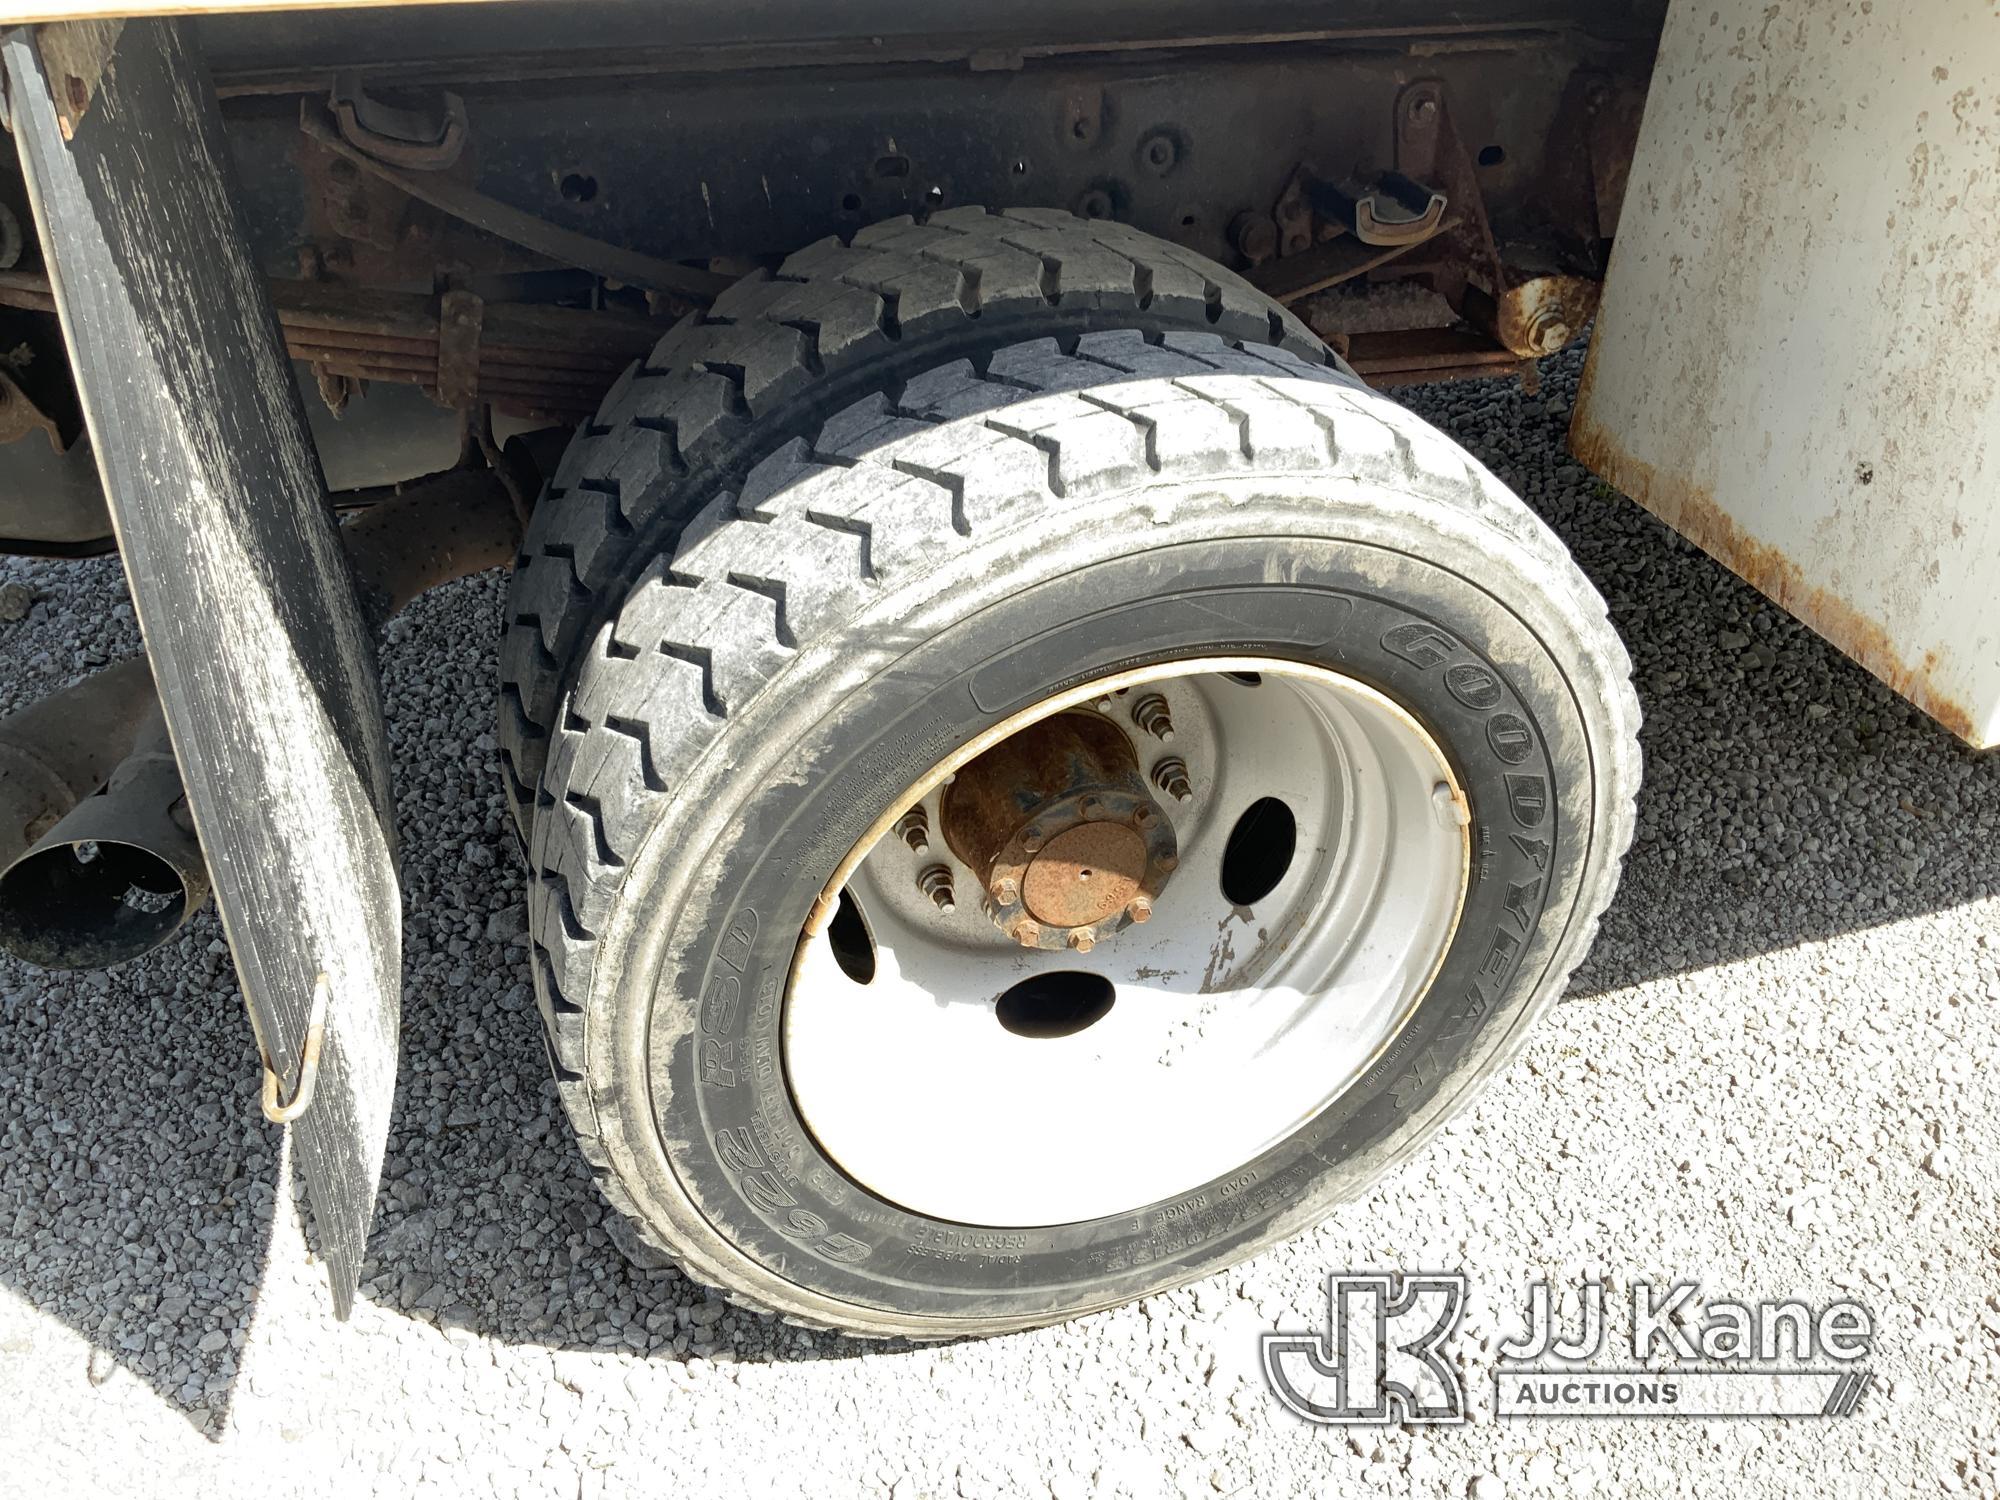 (Fort Wayne, IN) 2013 Ford F550 4x4 Crew-Cab Chipper Dump Truck Runs & Moves) (Dump Inoperable, Chec